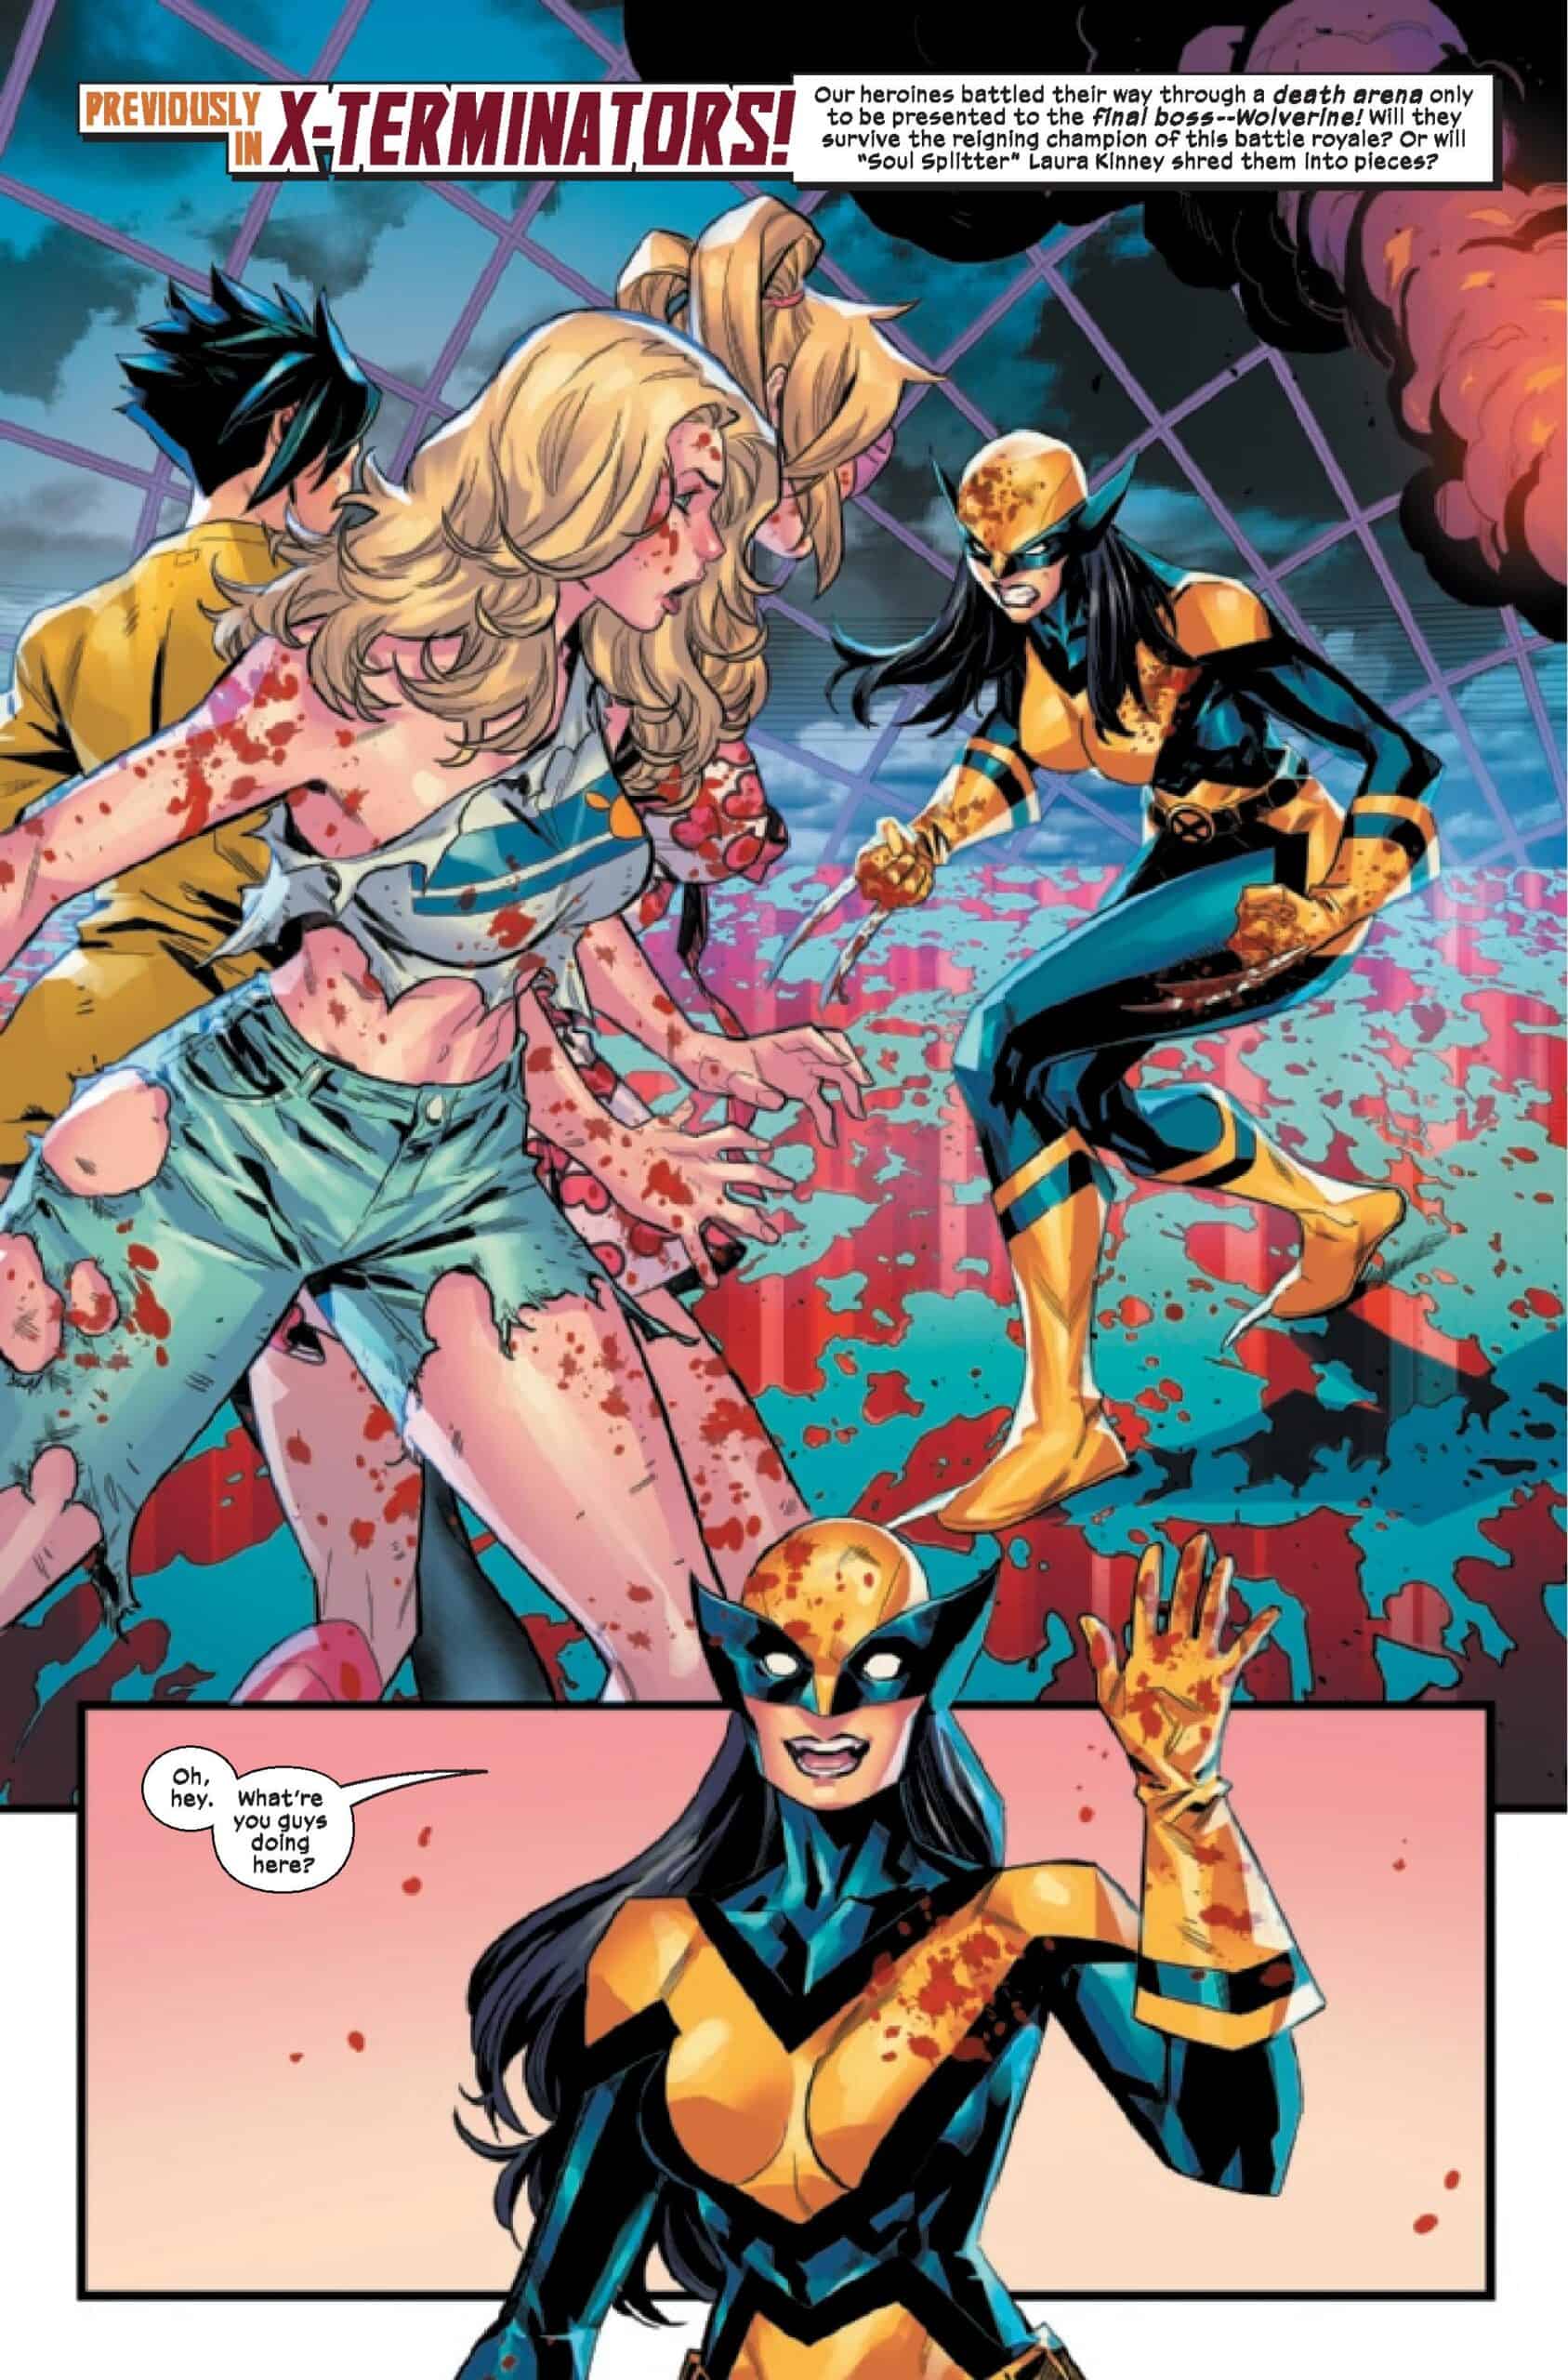 The New Mutants #2  Versus the Sentinels  NM- Marvel Comics C1B | Comic  Books - Bronze Age, Marvel, New Mutants, Superhero